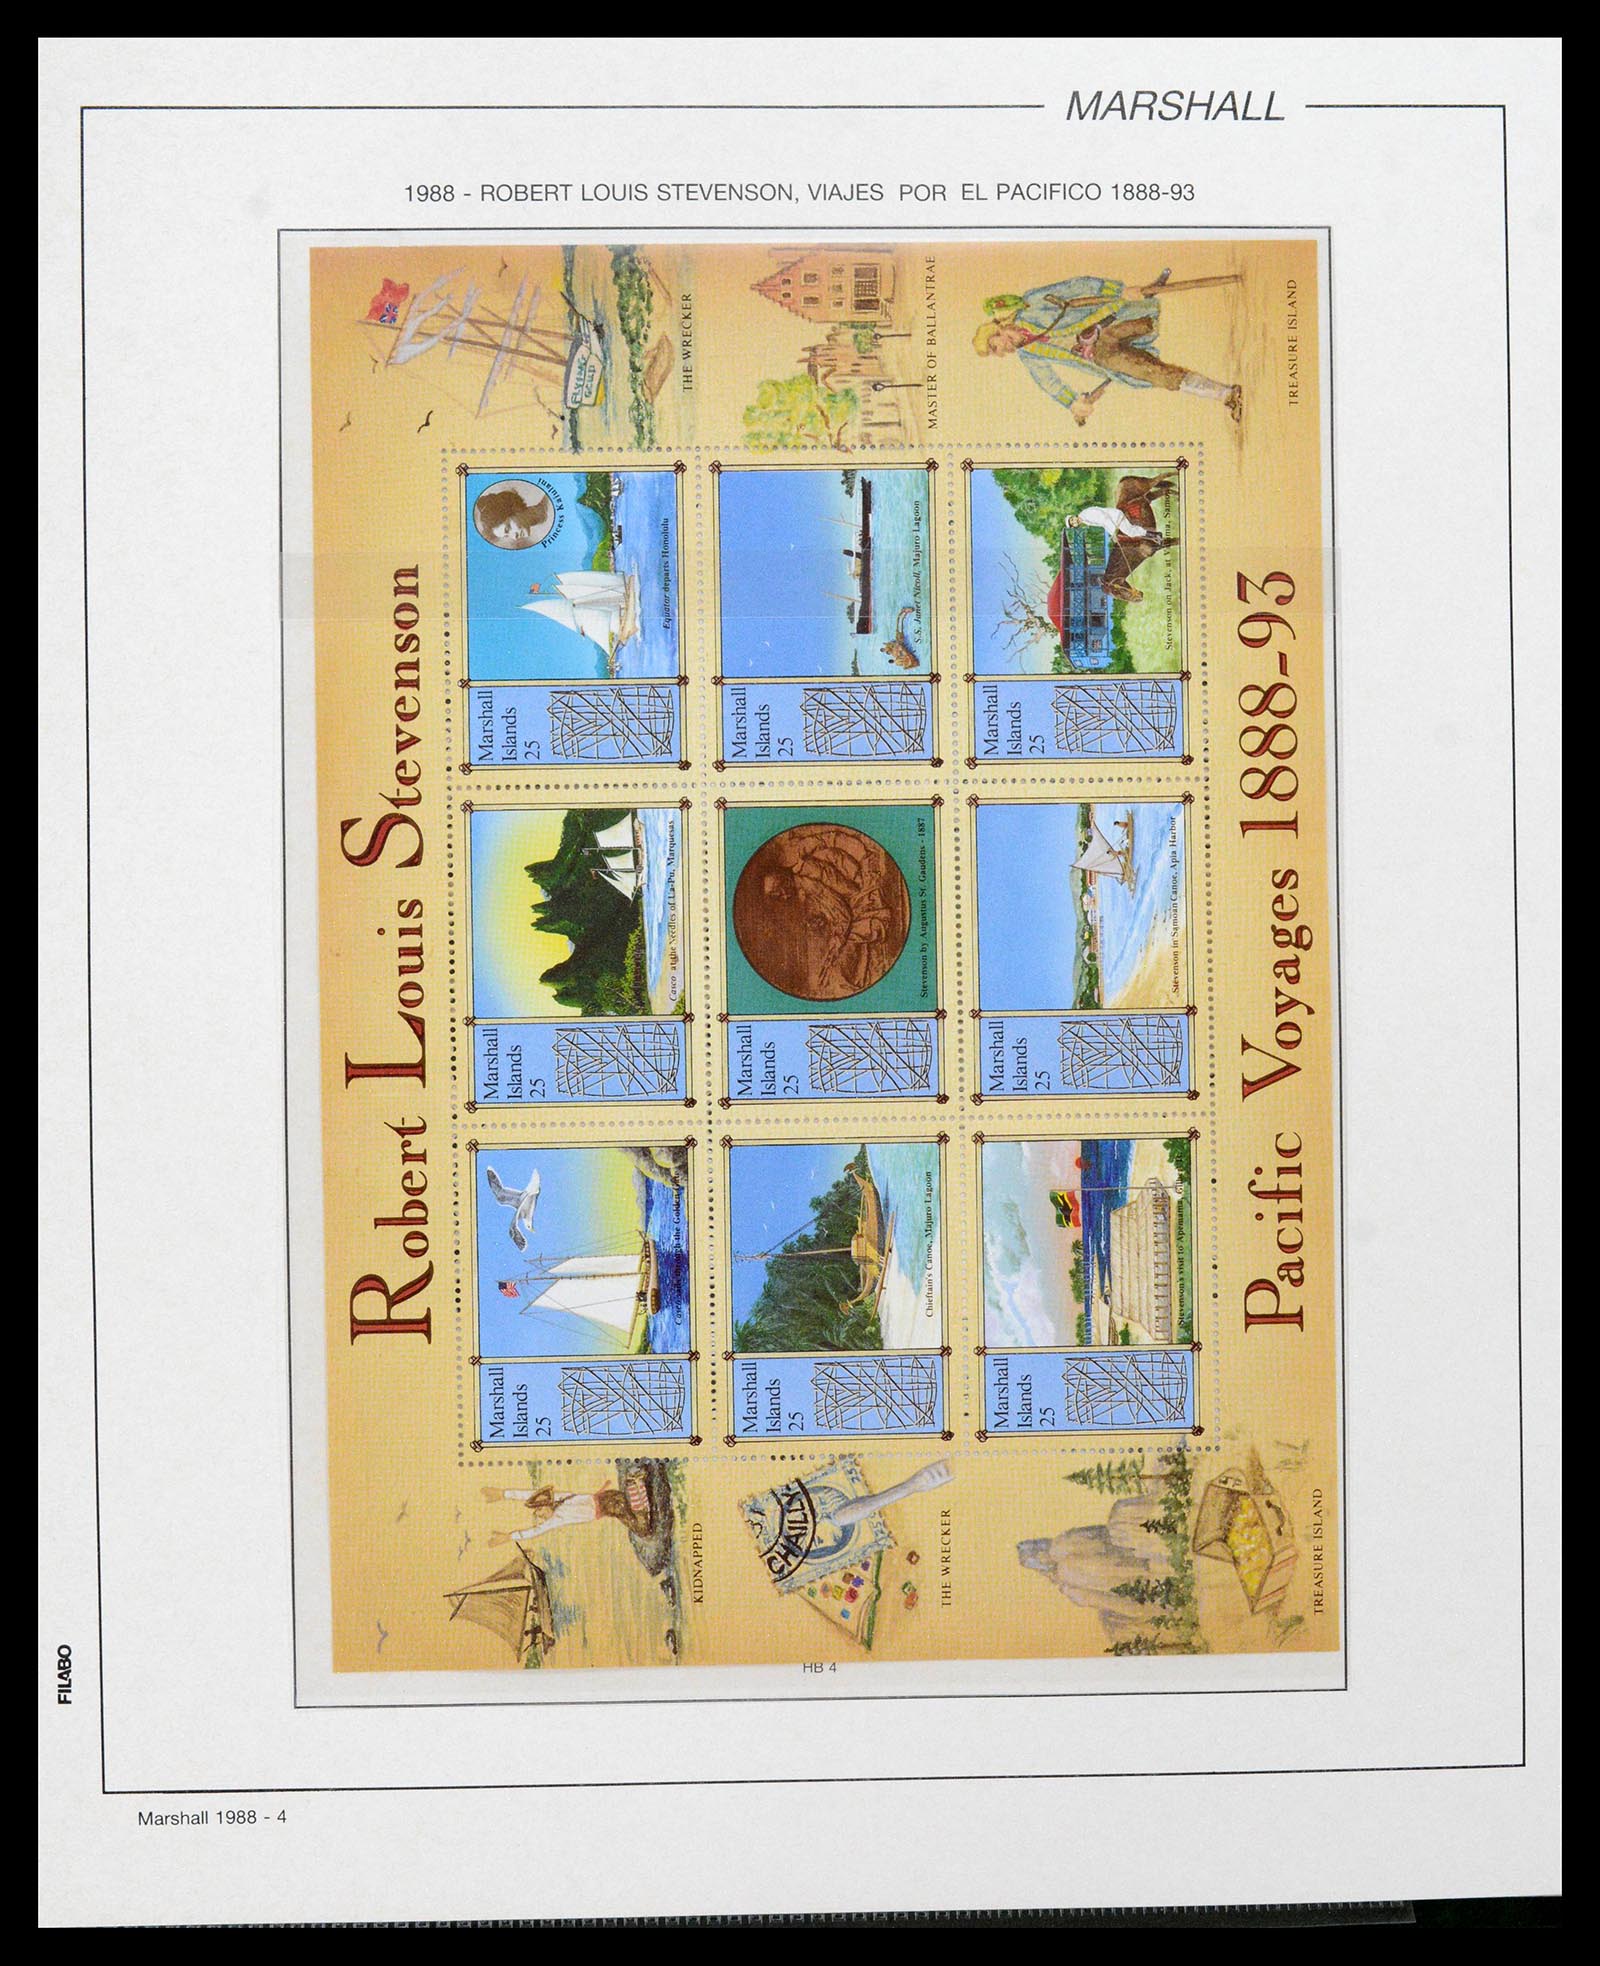 39222 0131 - Stamp collection 39222 Palau, Micronesia and Marshall islands 1980-1995.